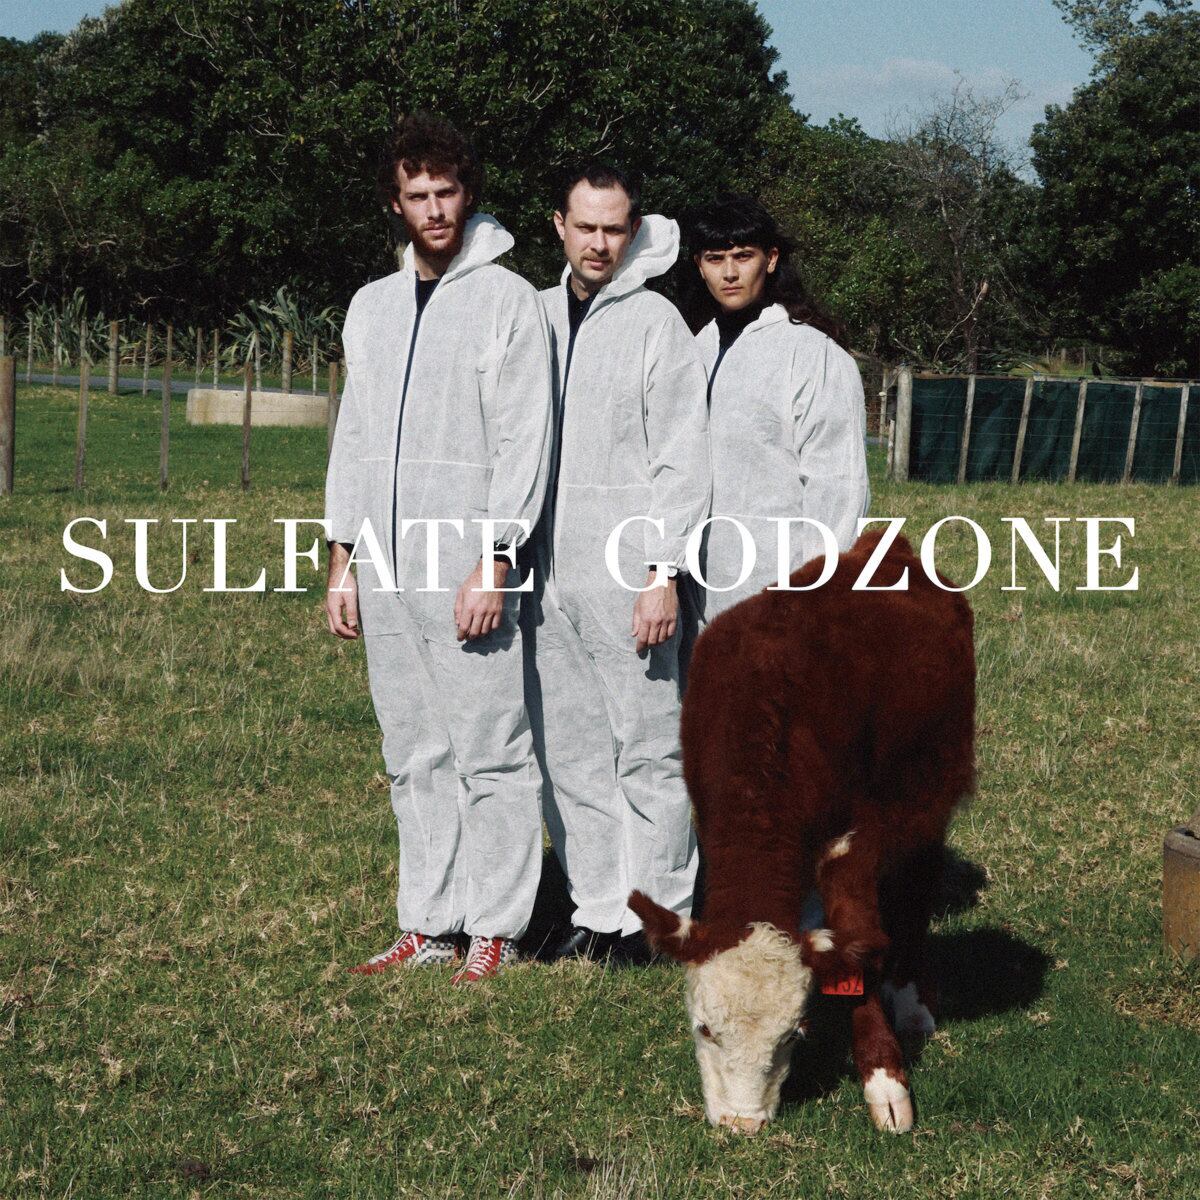 Sulfate / Godzone（300 Ltd Green LP）